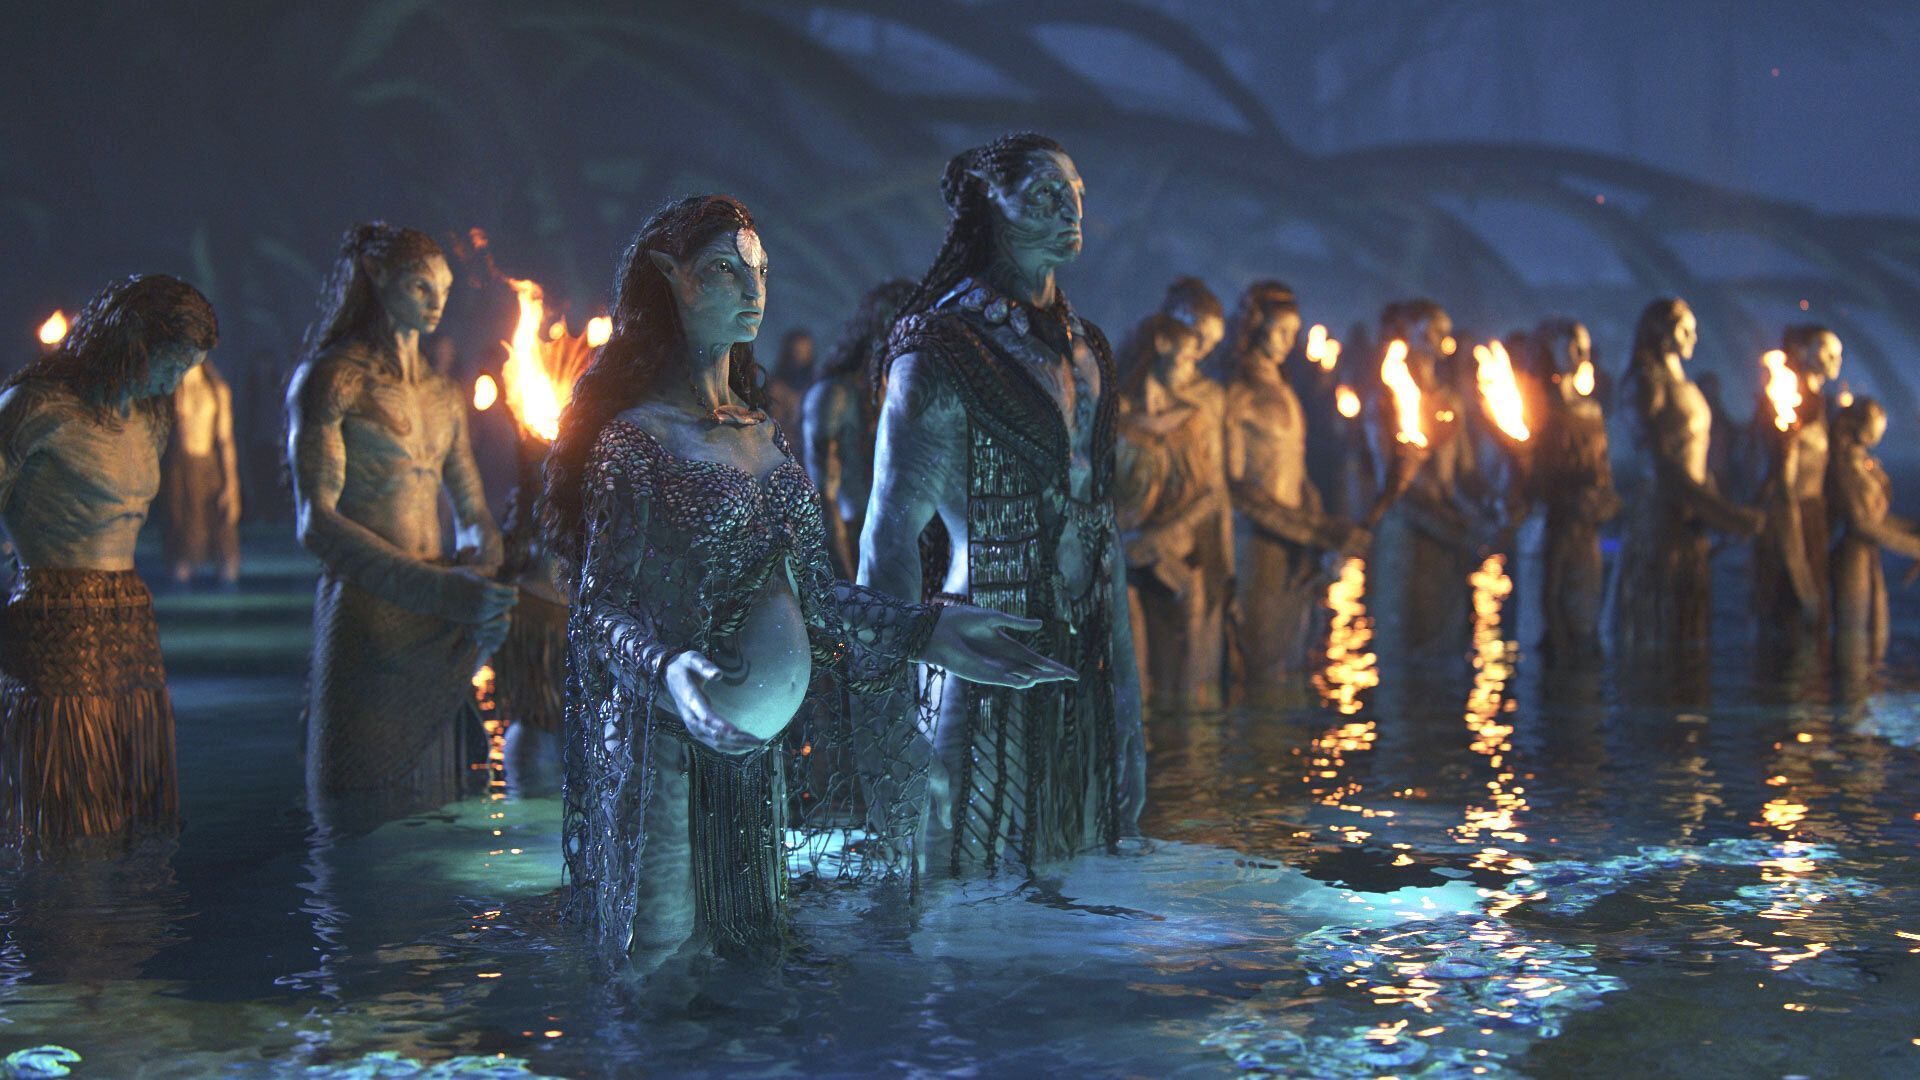 Reviews: Avatar: The Way of Water - IMDb